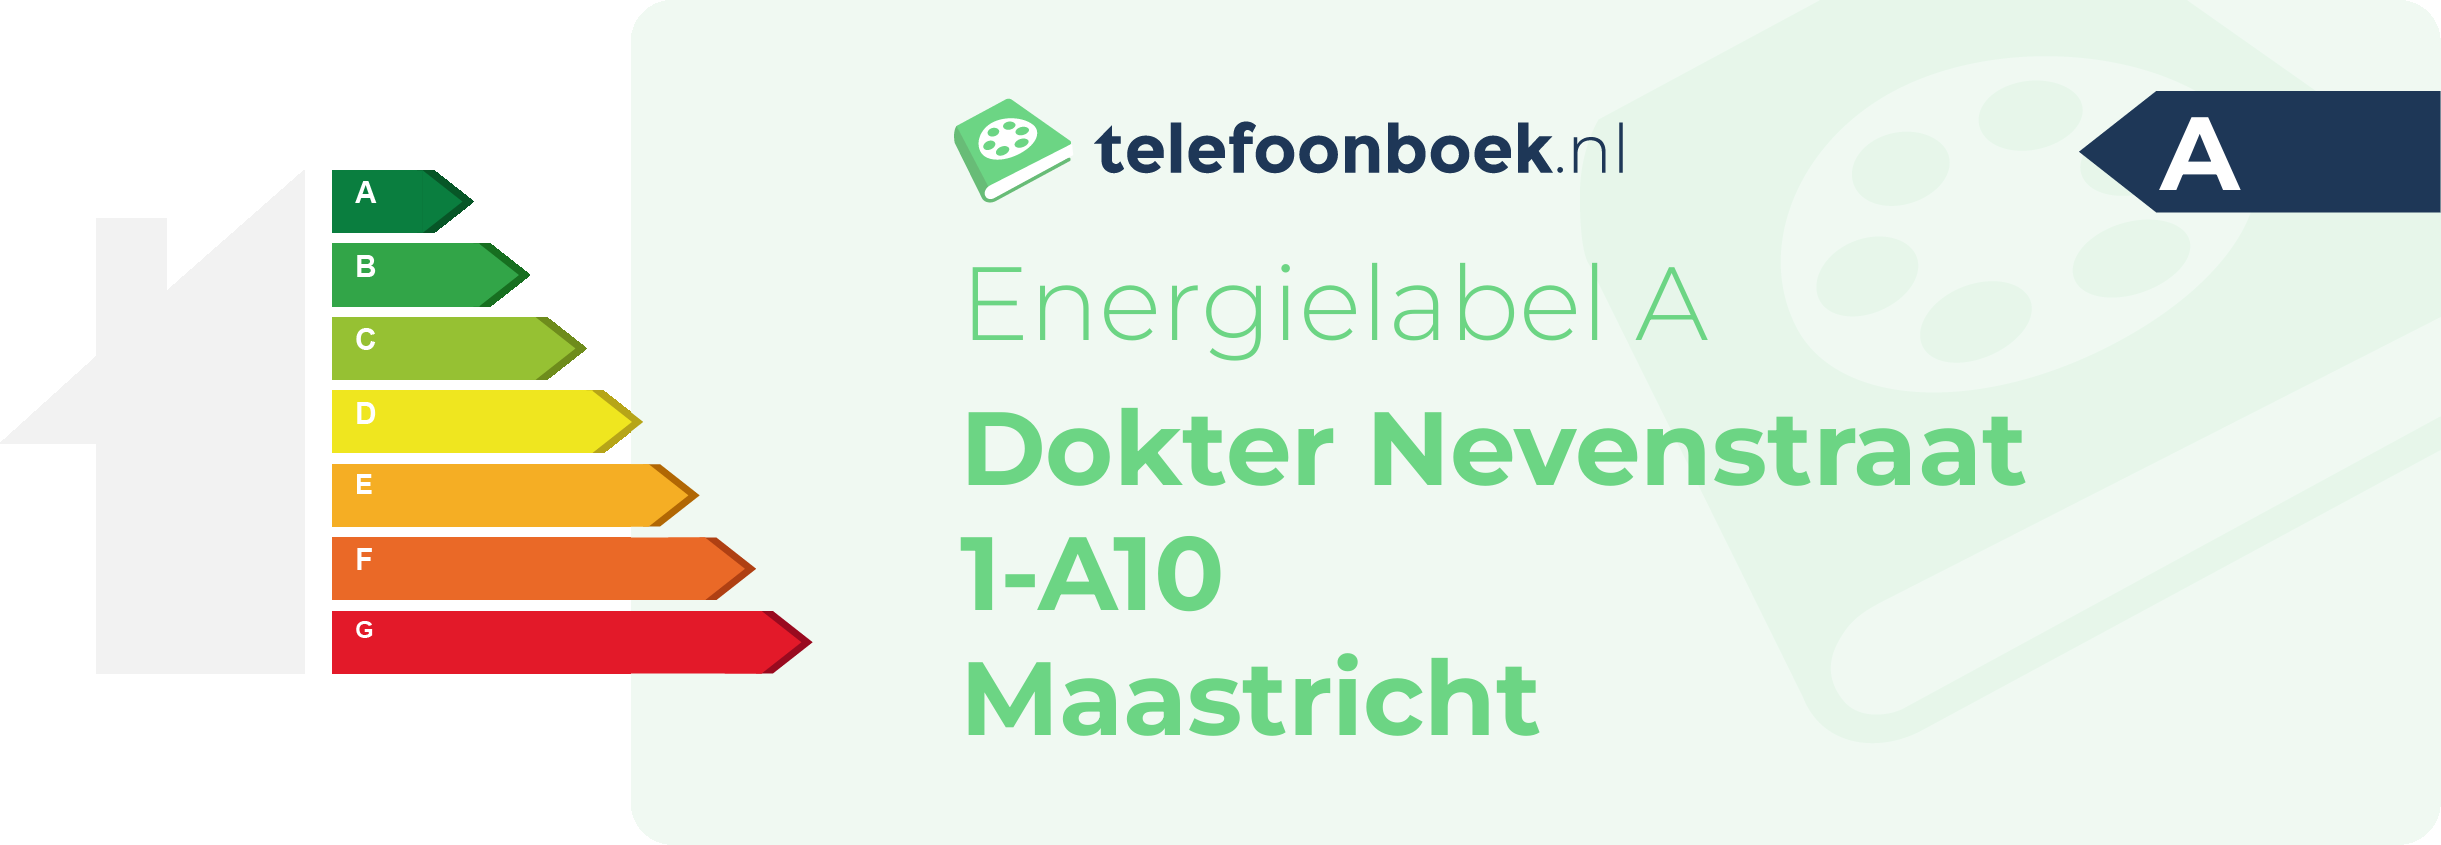 Energielabel Dokter Nevenstraat 1-A10 Maastricht